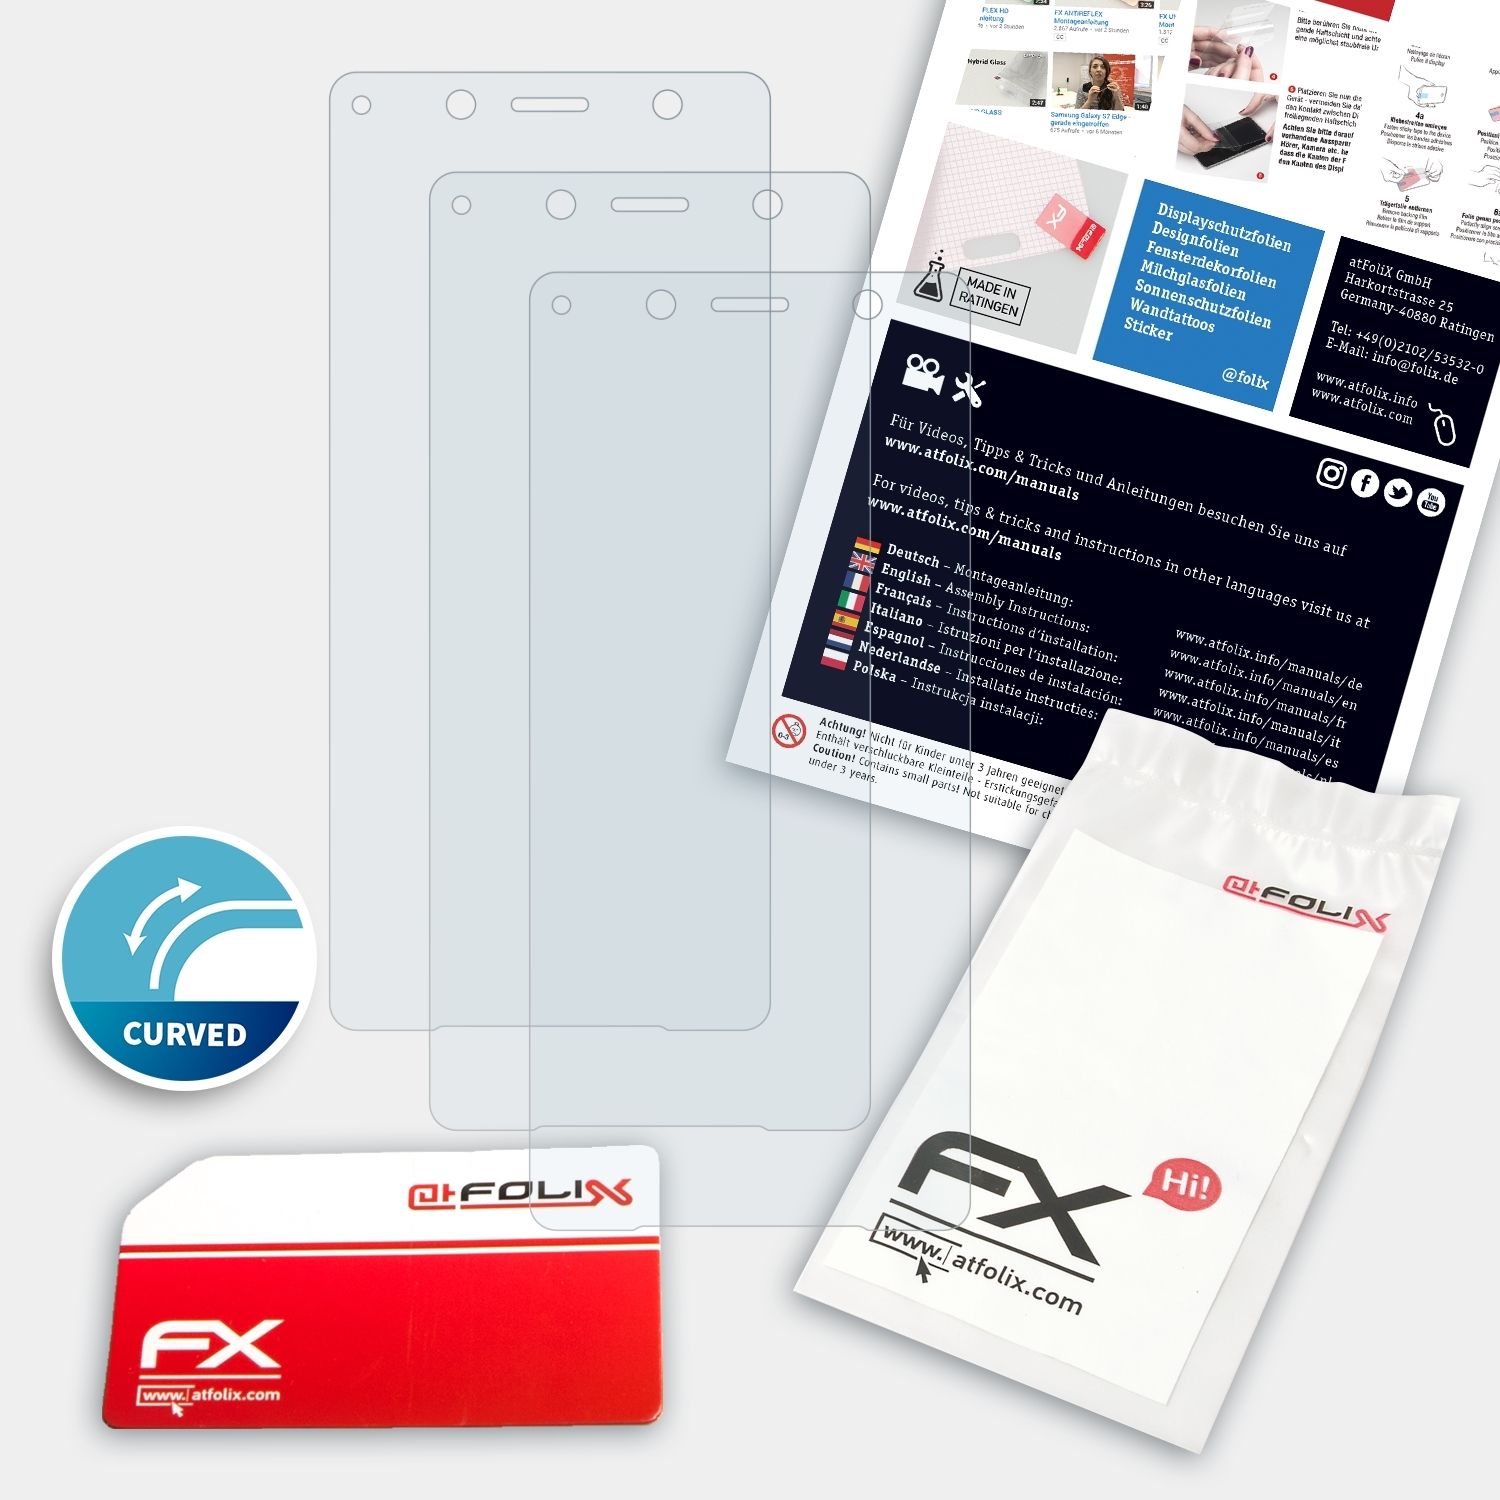 ATFOLIX 3x FX-ActiFleX XZ2 Displayschutz(für Sony Xperia Compact)